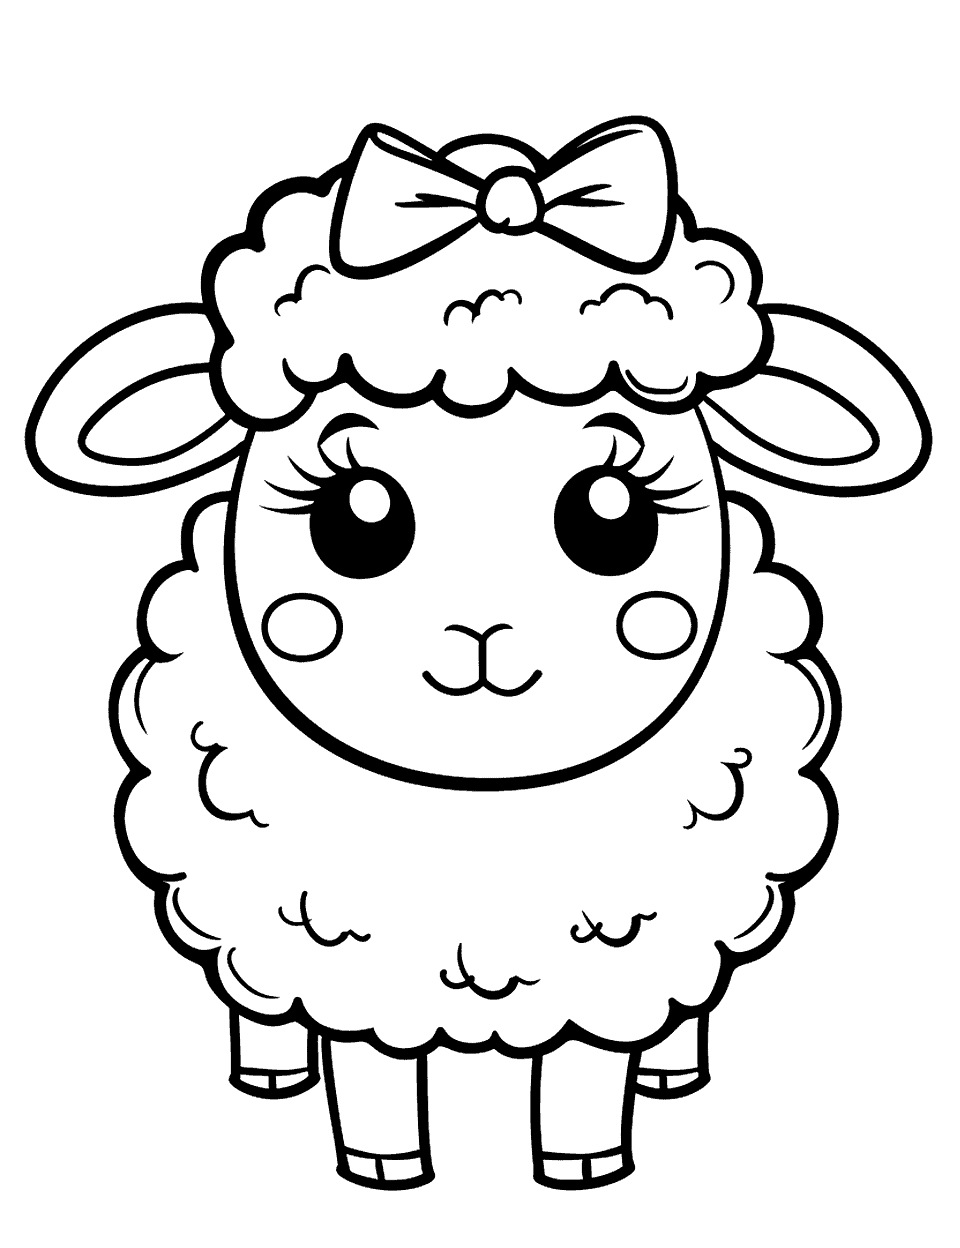 Kawaii Sheep with a Bow Coloring Page - A cute, stylized ‘kawaii’ sheep wearing a bow on its head.